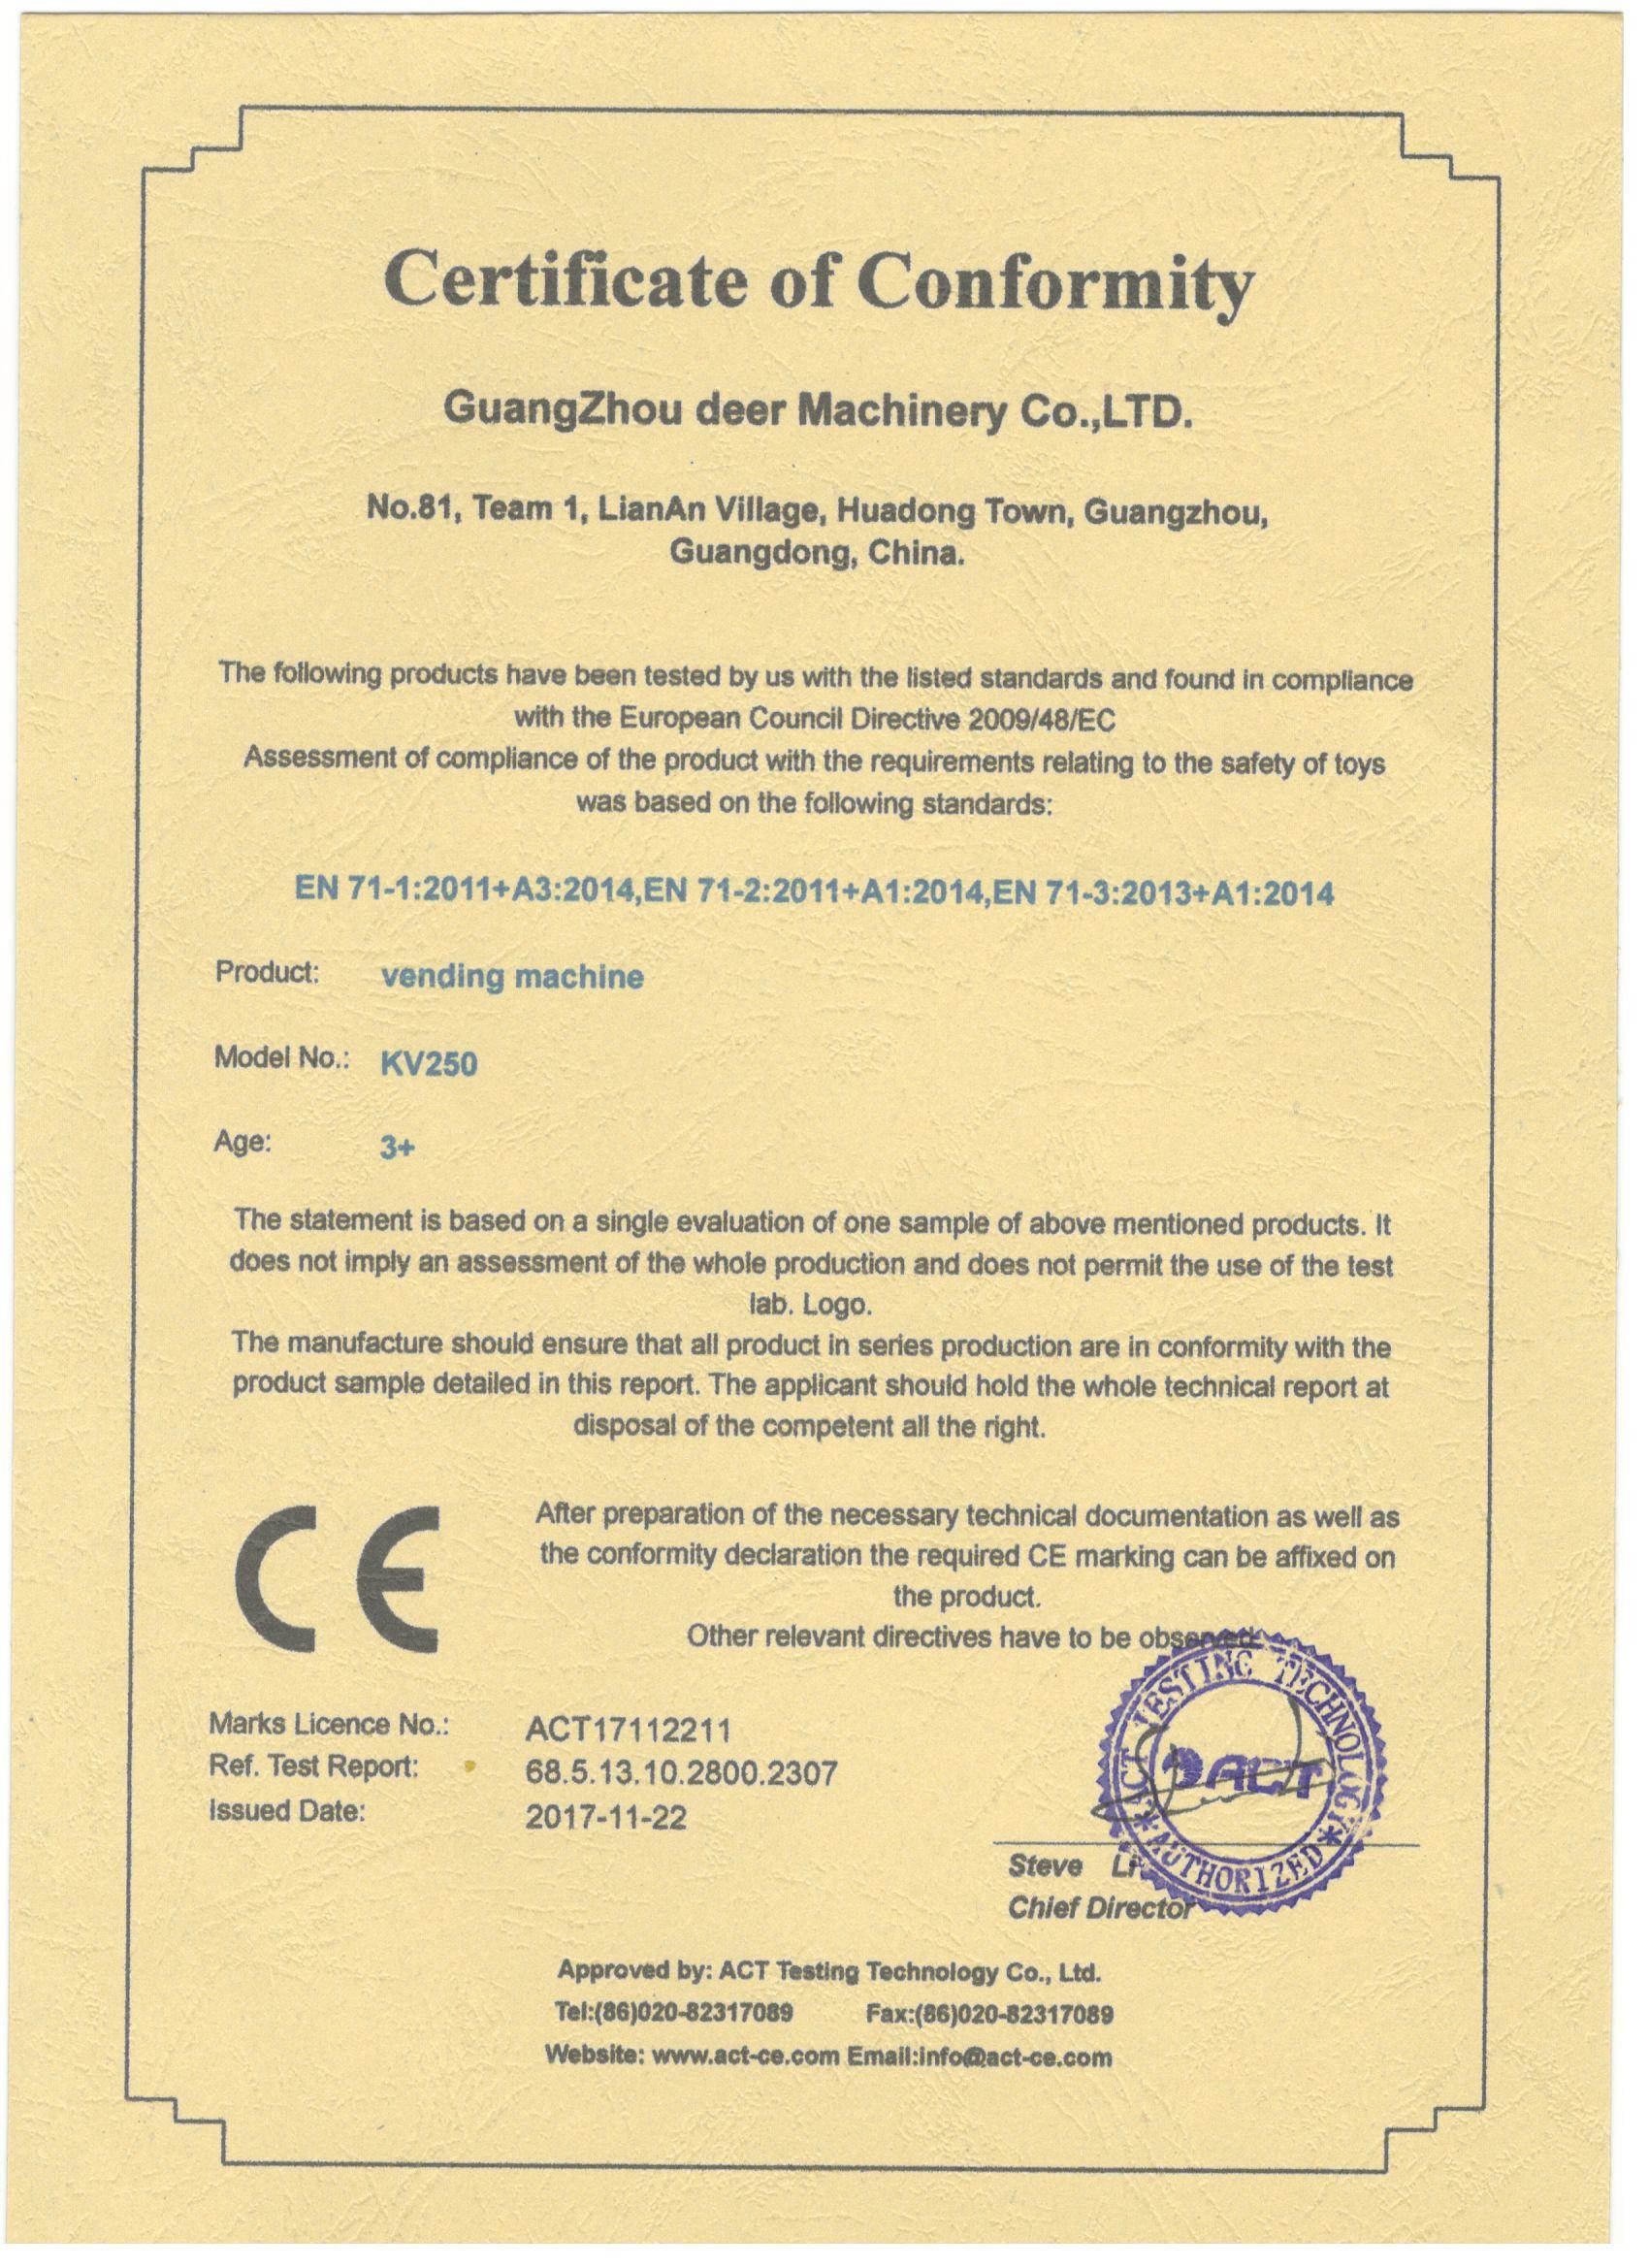 China Guangzhou Deer Machinery Co., Ltd. Certificaciones